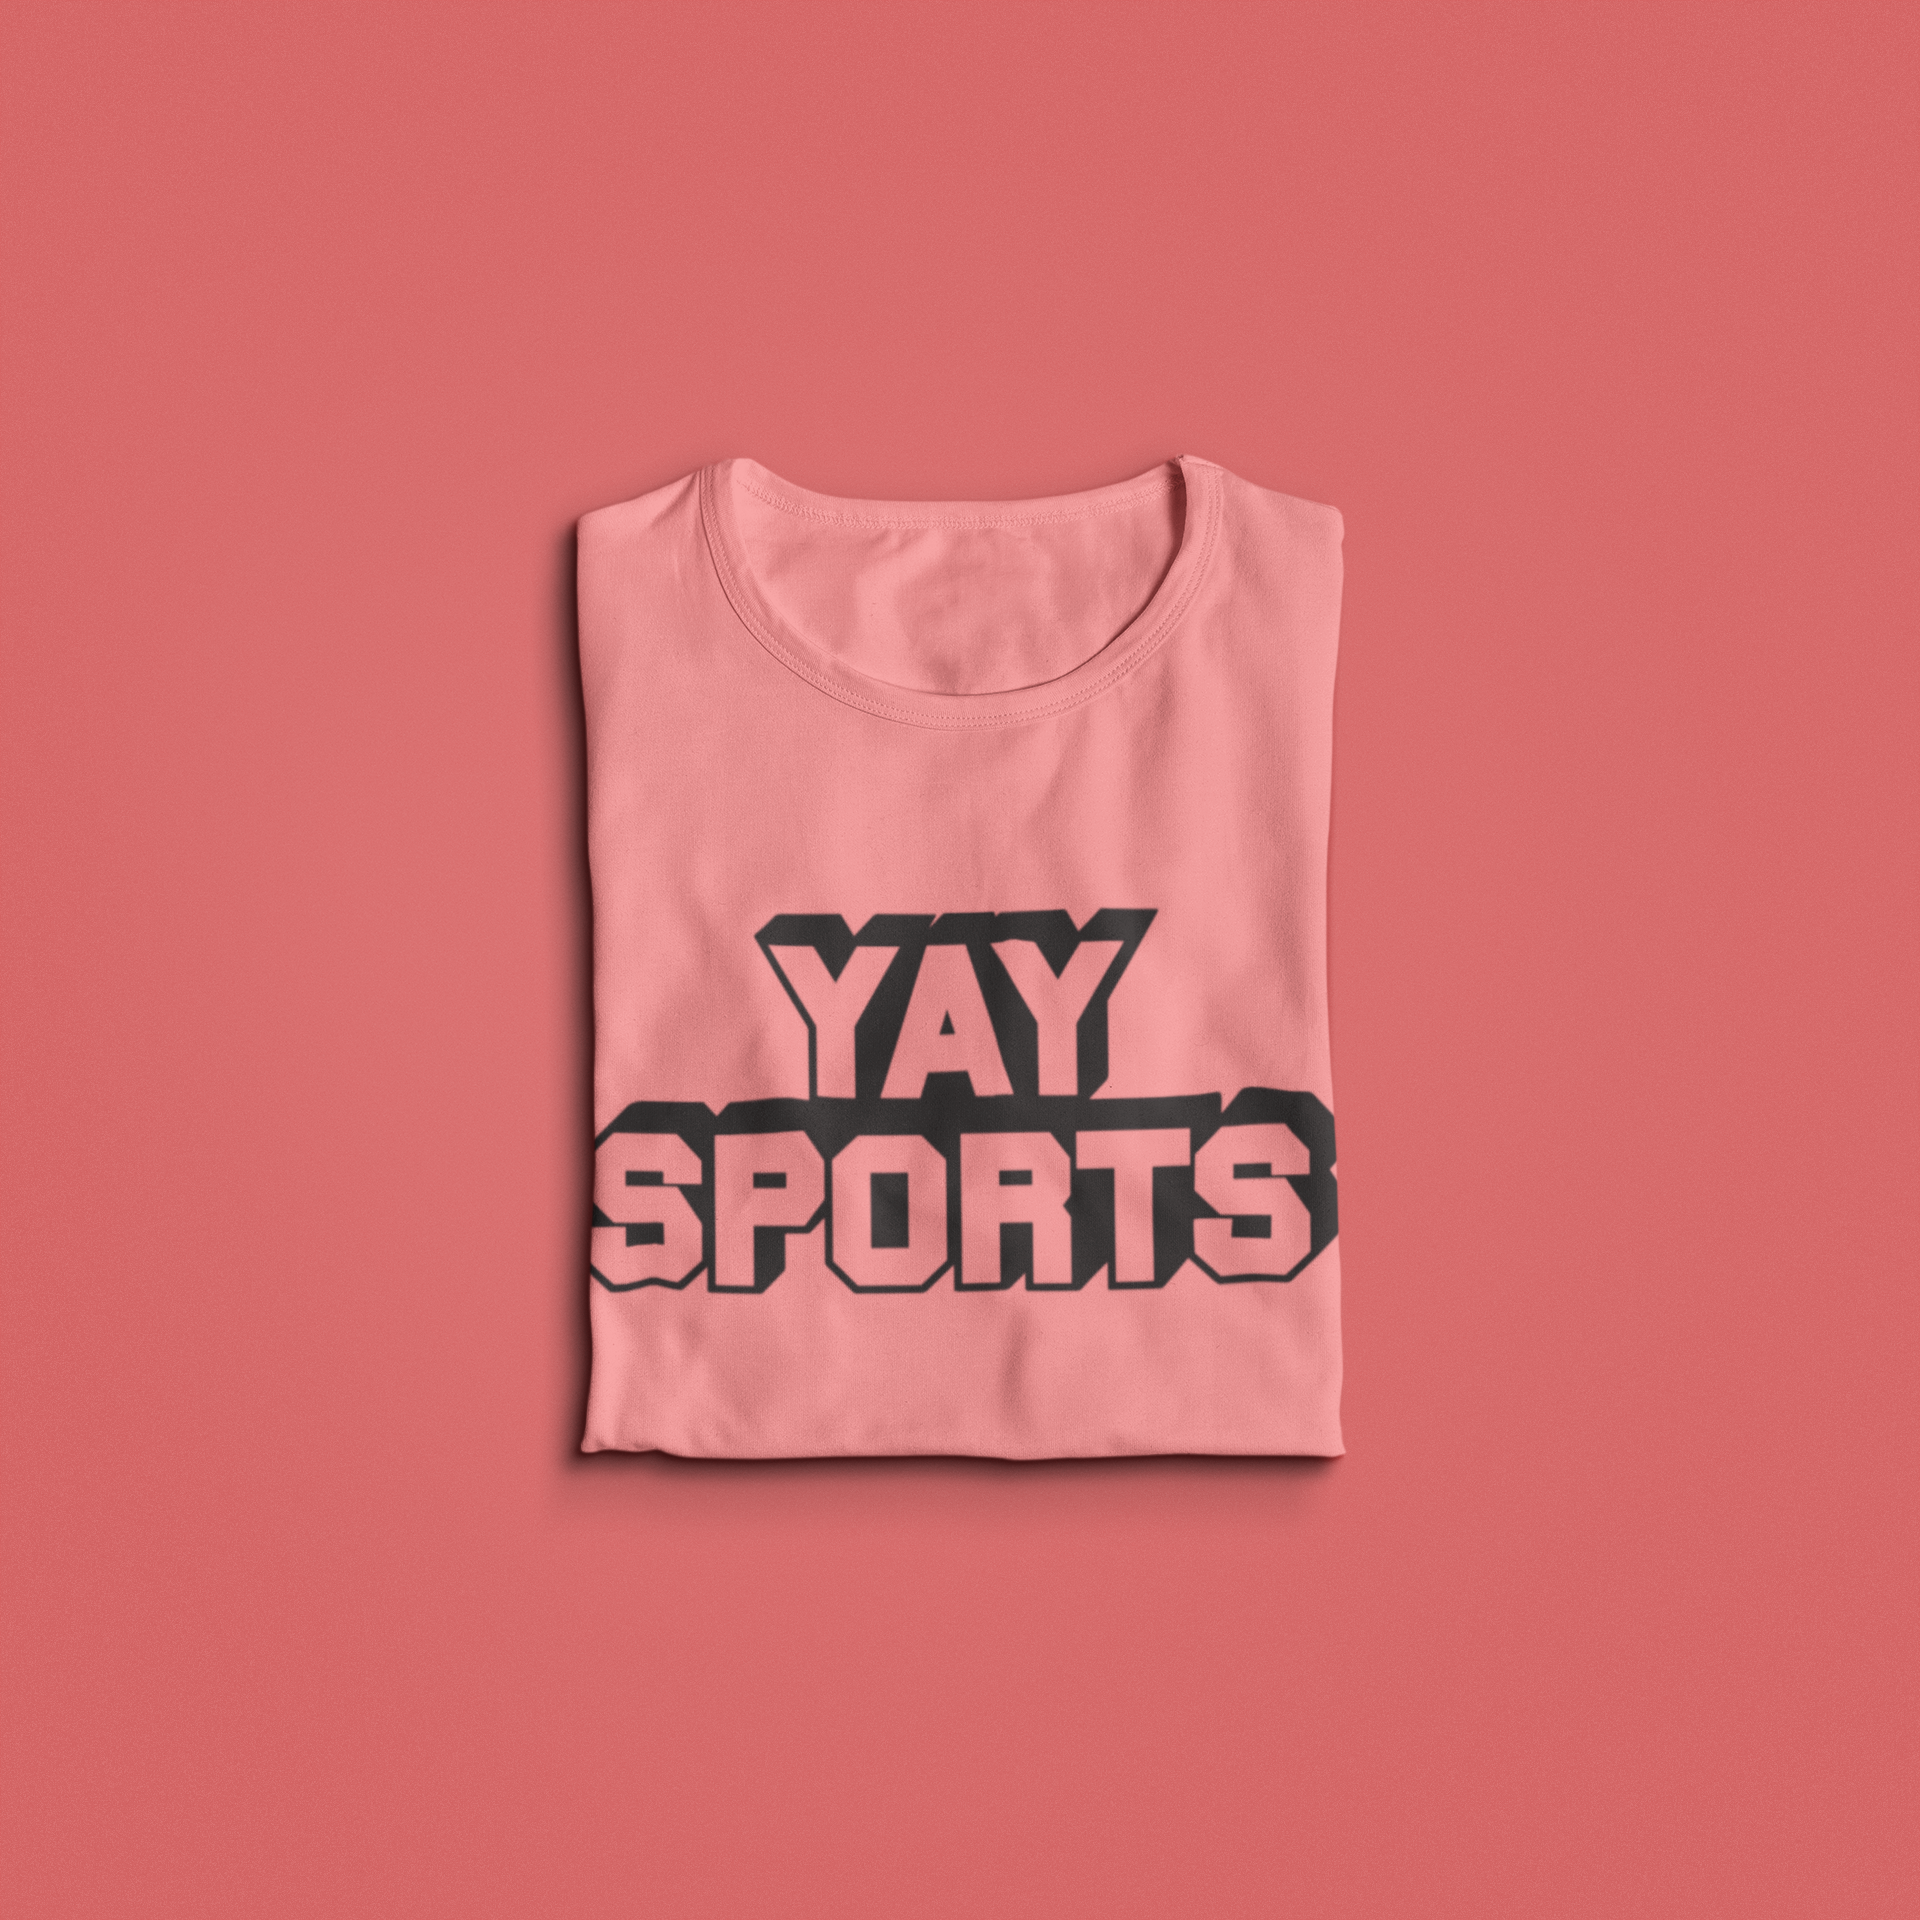 Yay Sports Cute T-Shirt Design SVG